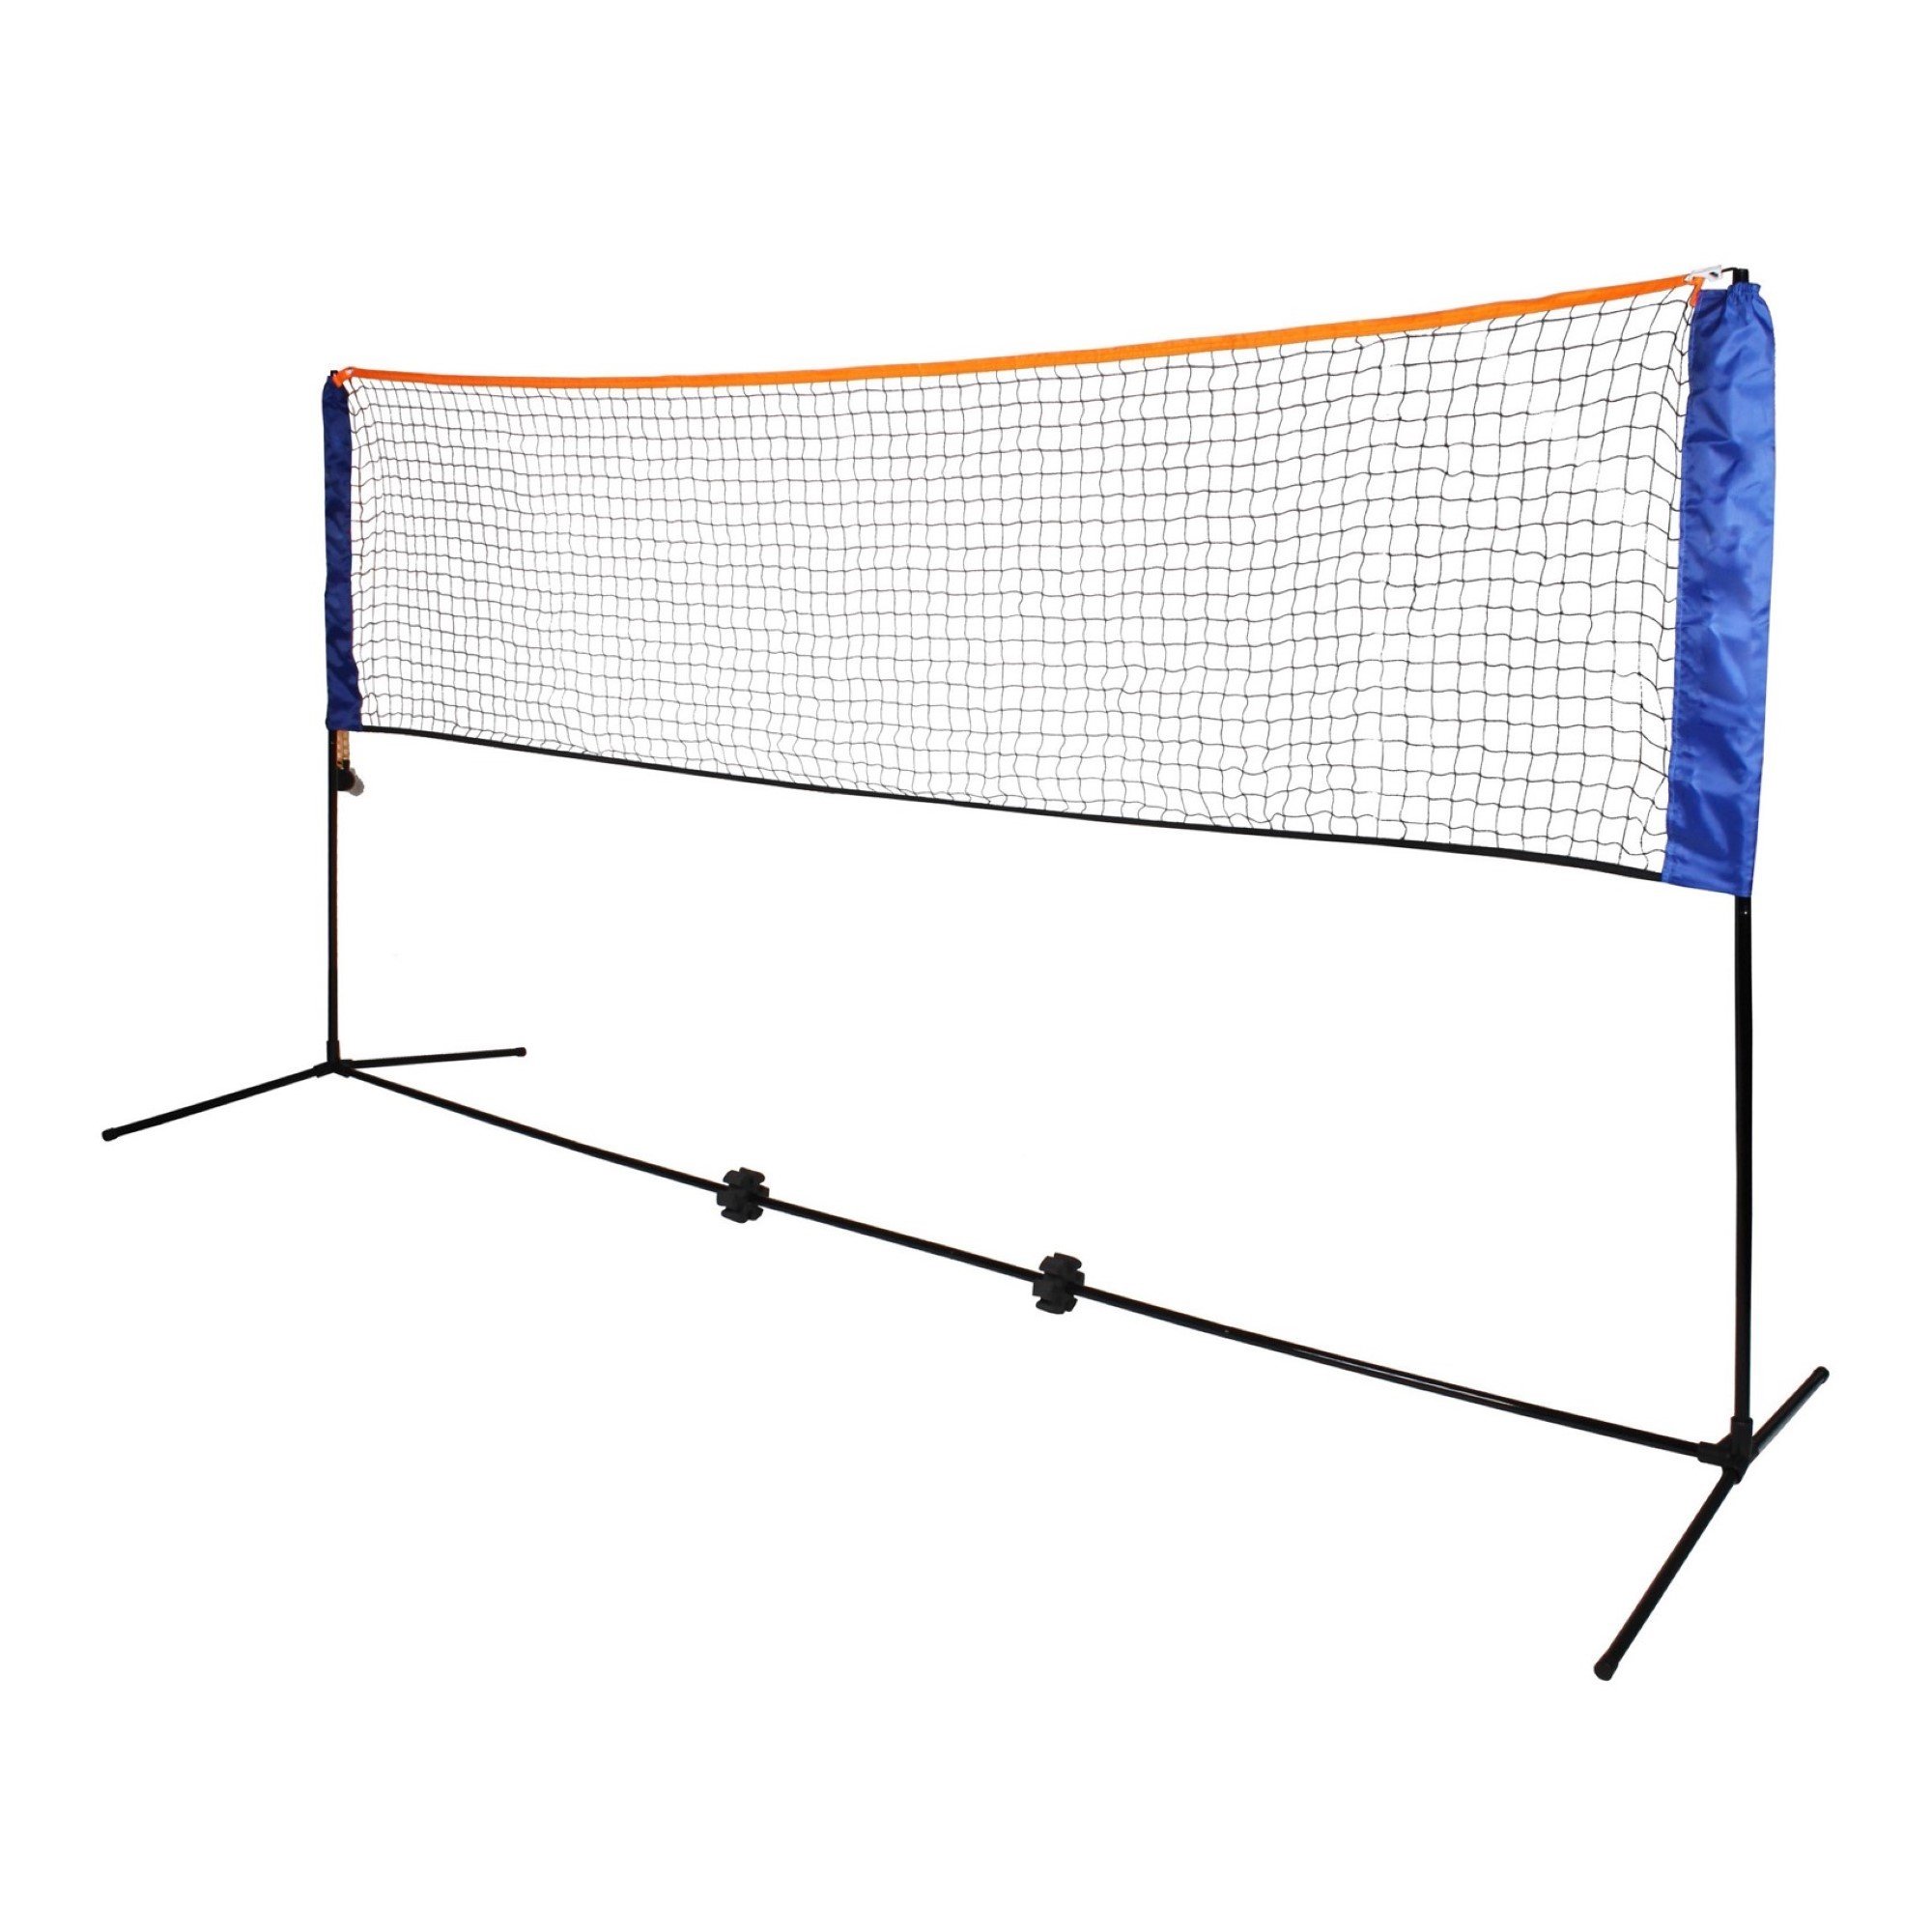 Small 3m Adjustable Foldable Badminton Tennis Volleyball Net